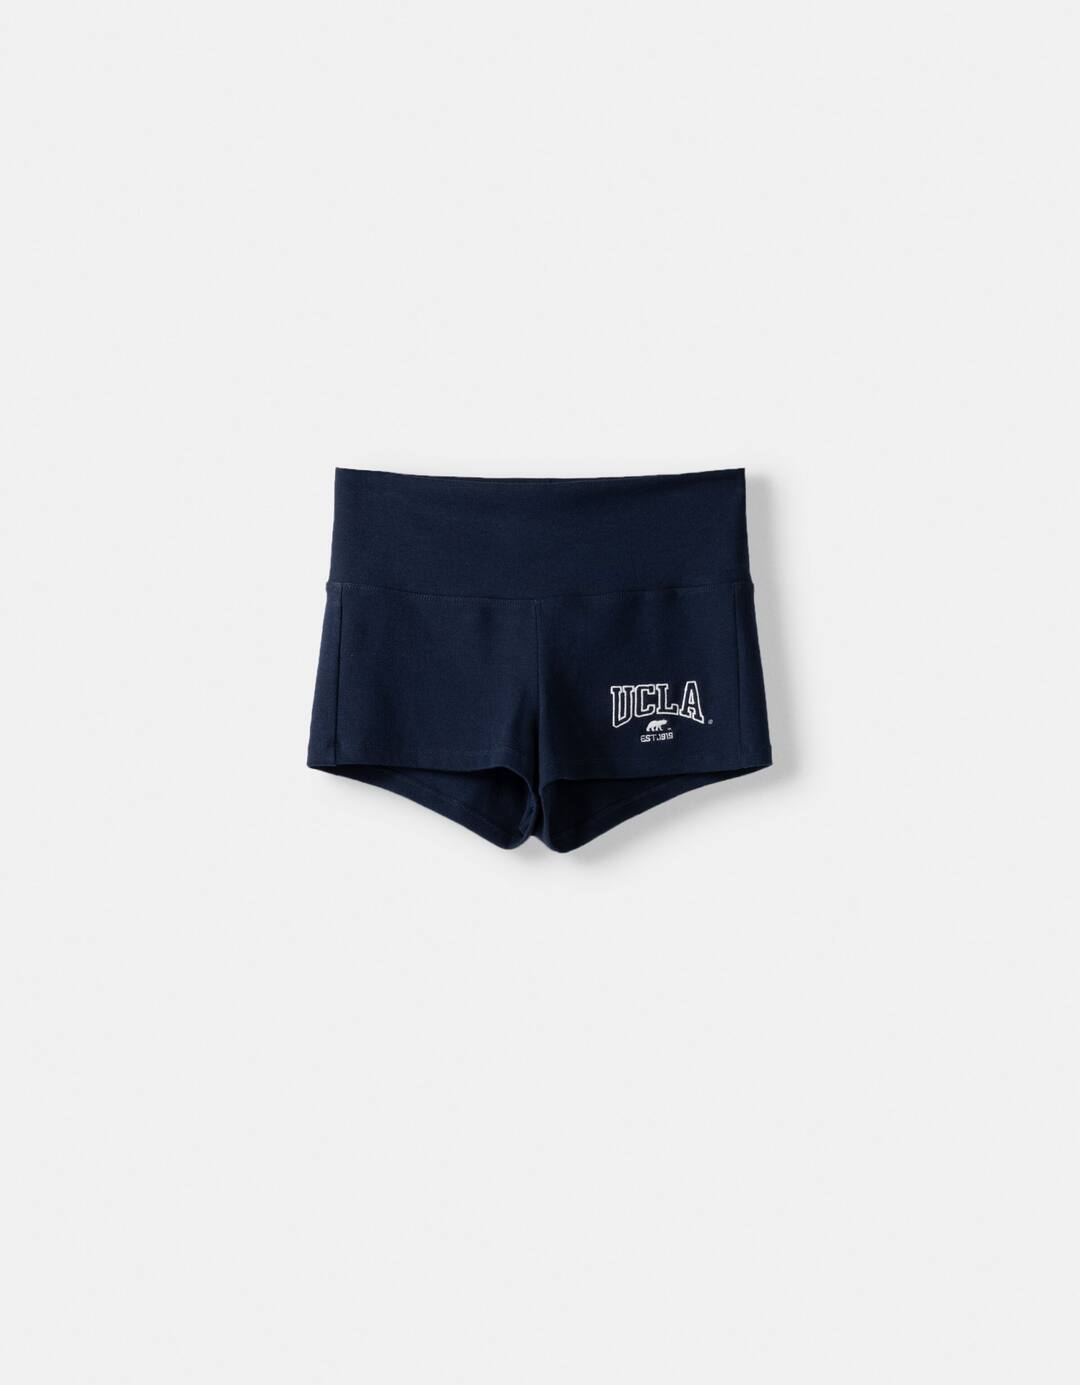 Embroidered UCLA shorts